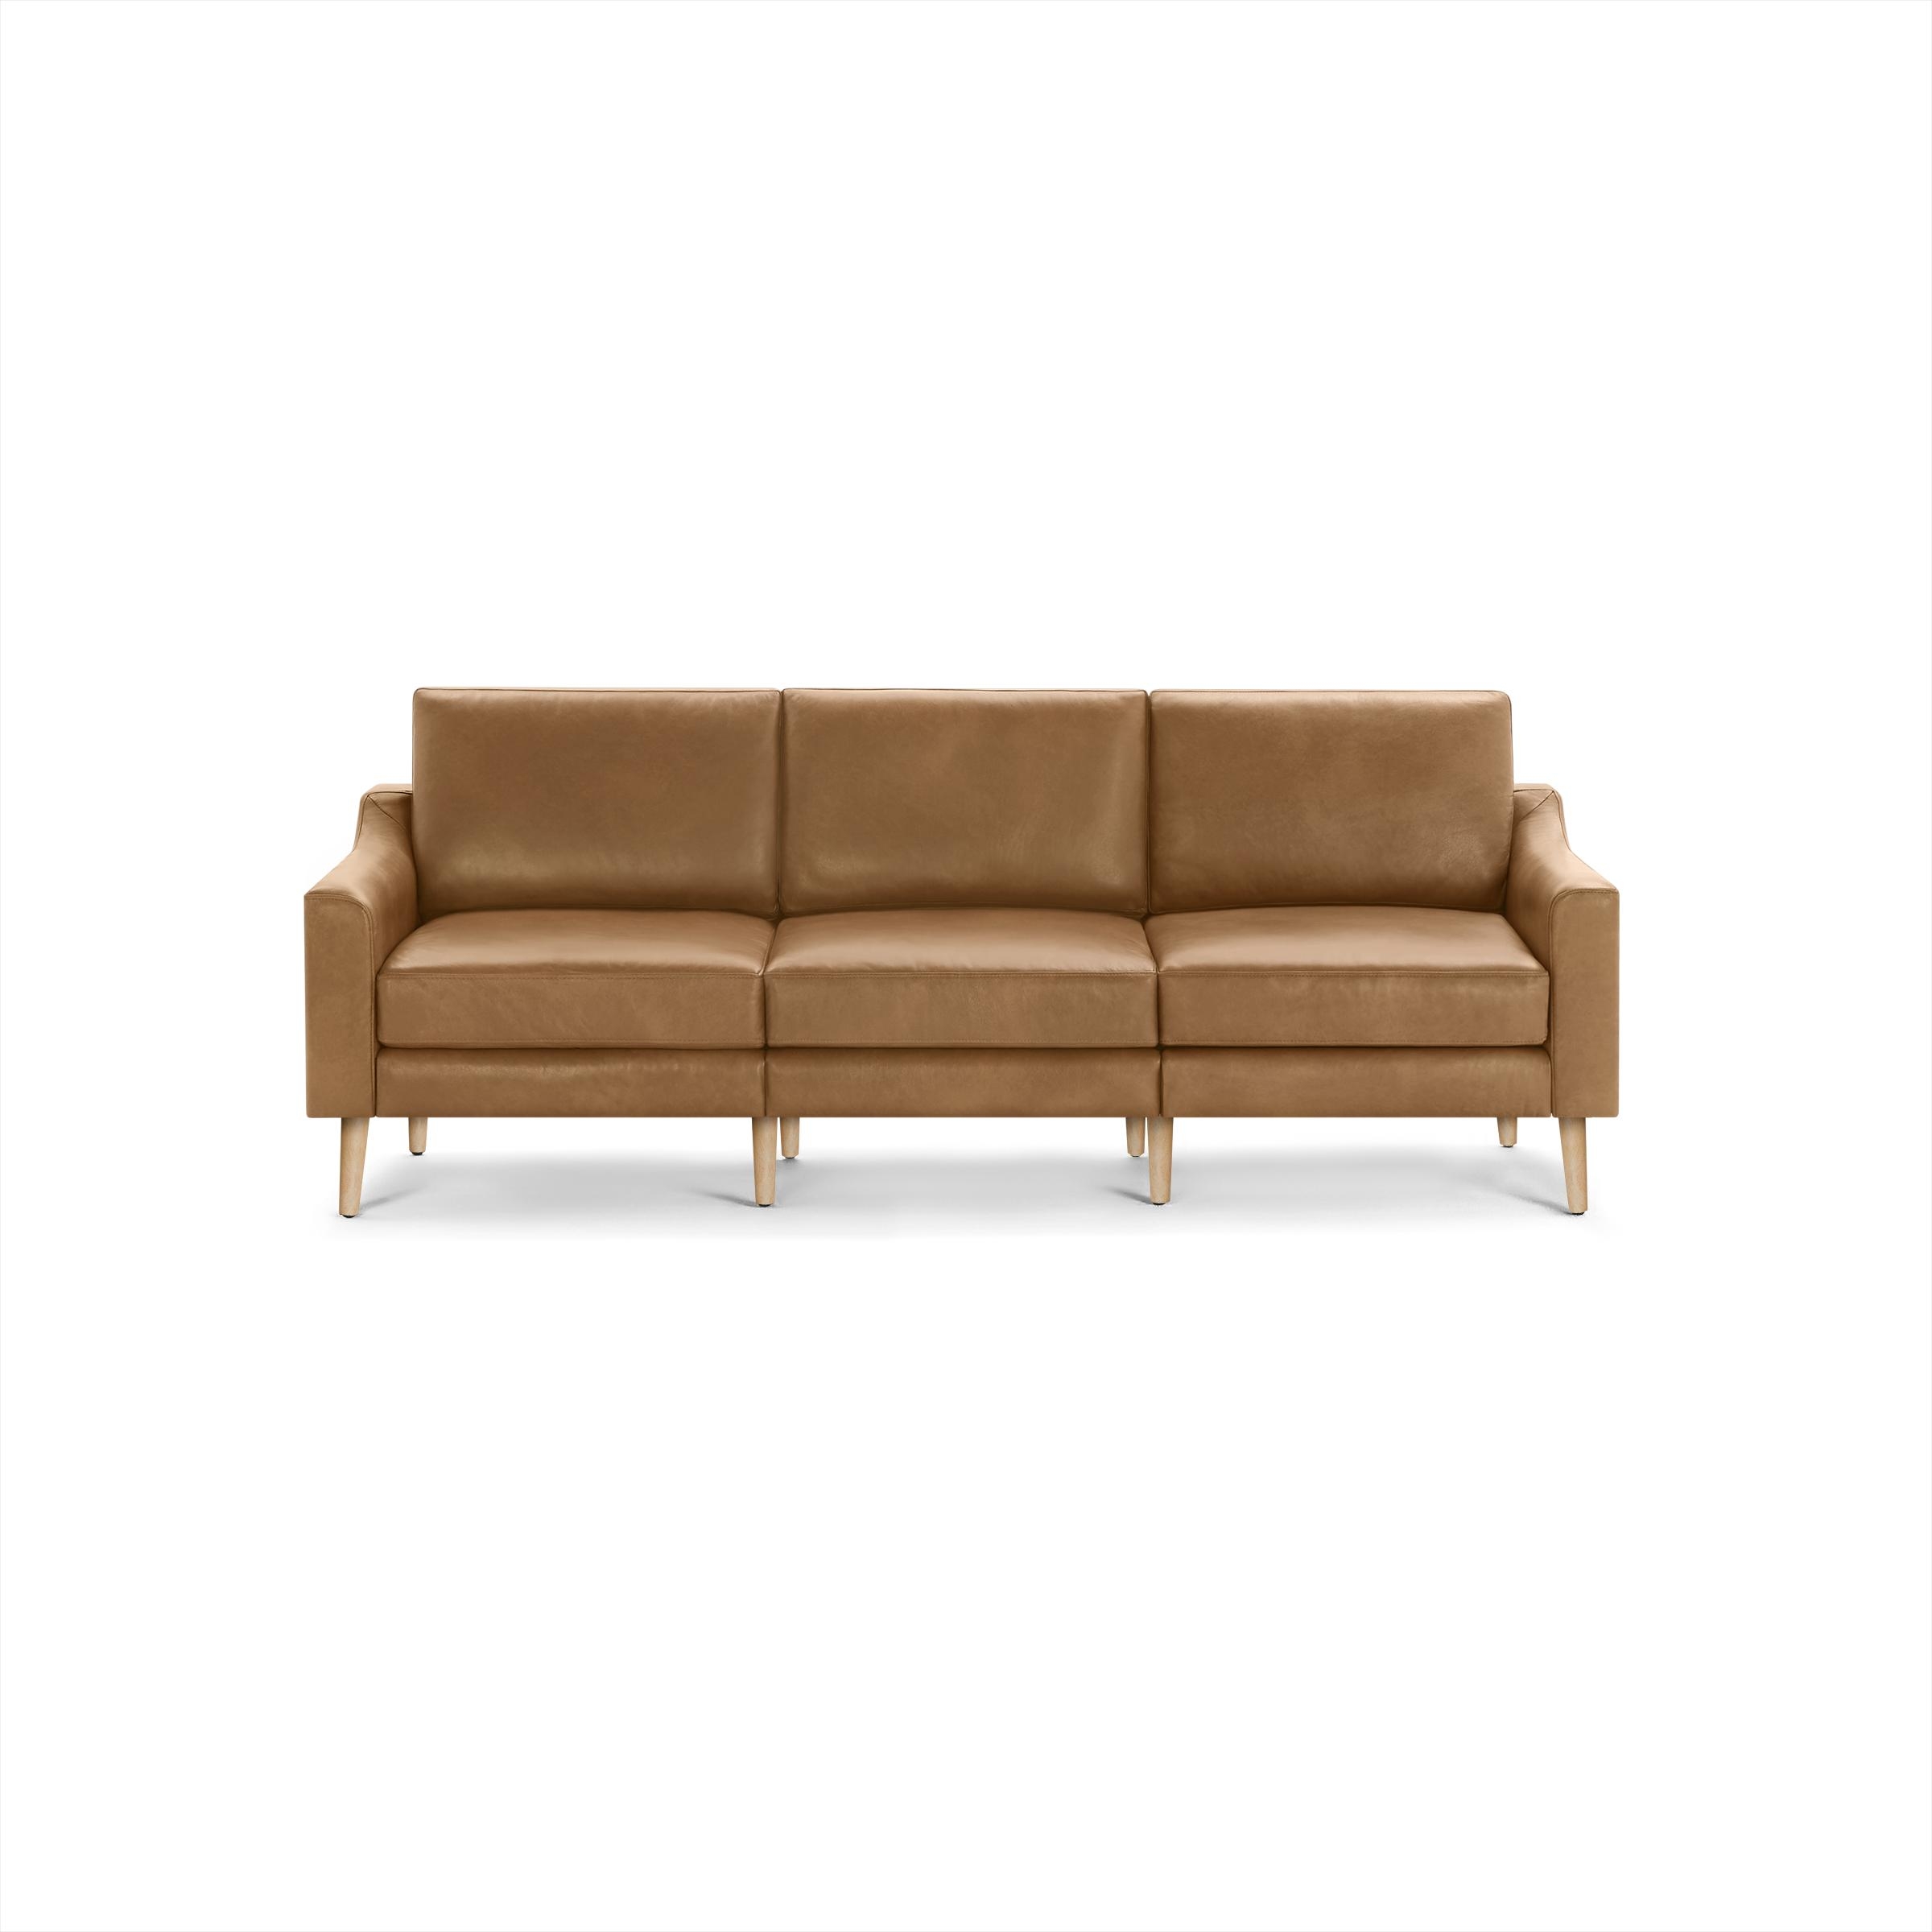 Nomad Leather Sofa in Camel, Oak Legs, Leg Finish: OakLegs - Image 0